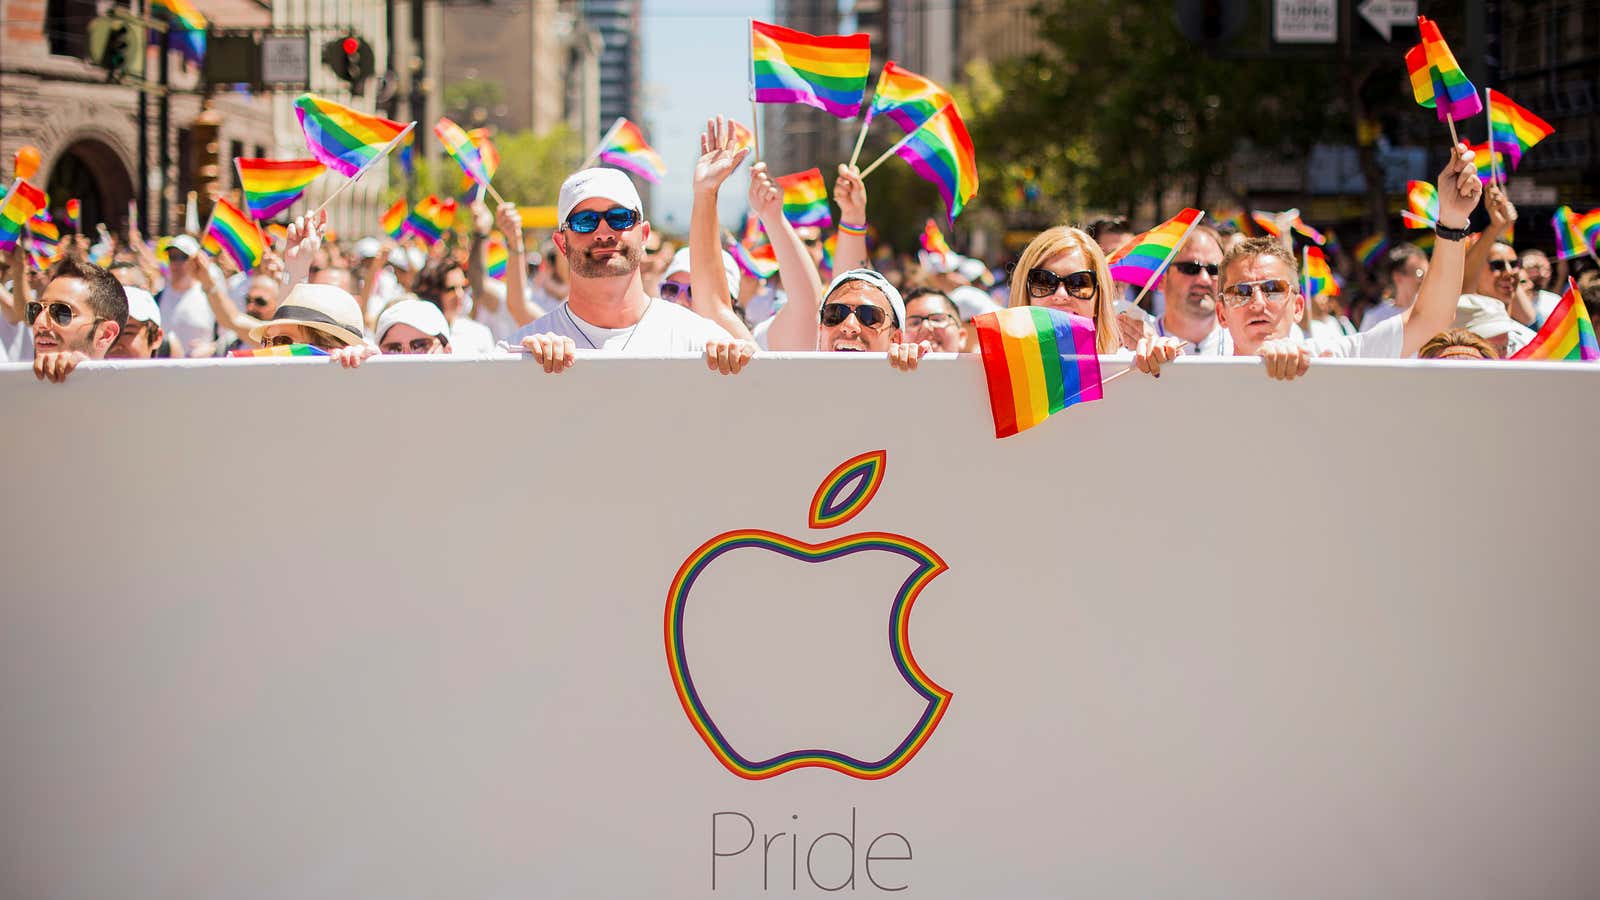 Apple has pride.